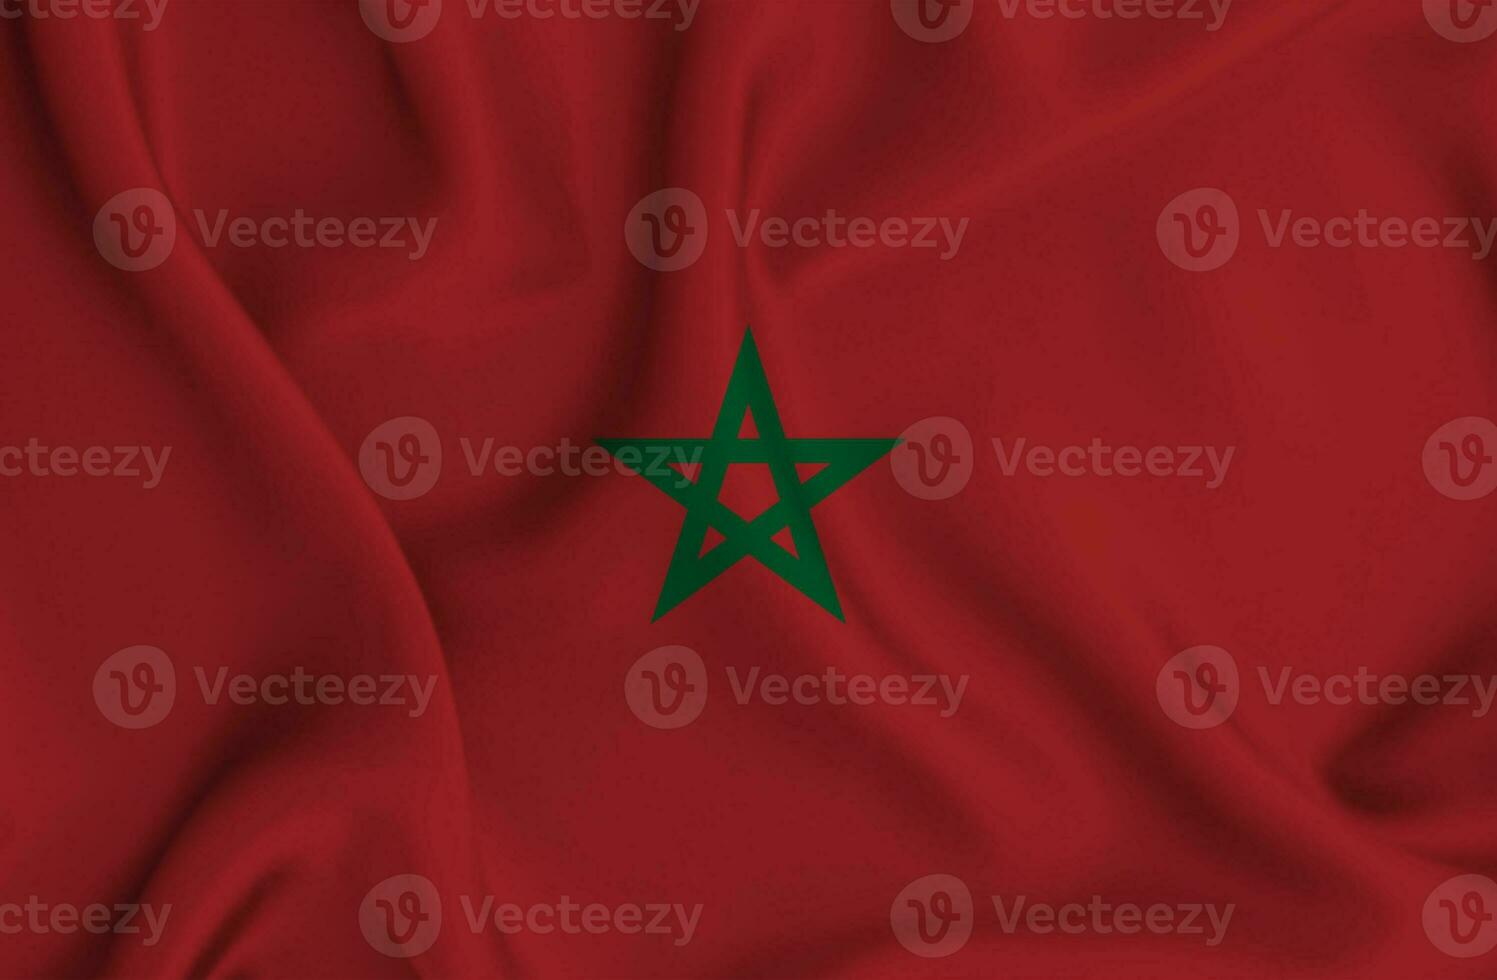 Realistic waving flag of Morocco, 3d illustration photo